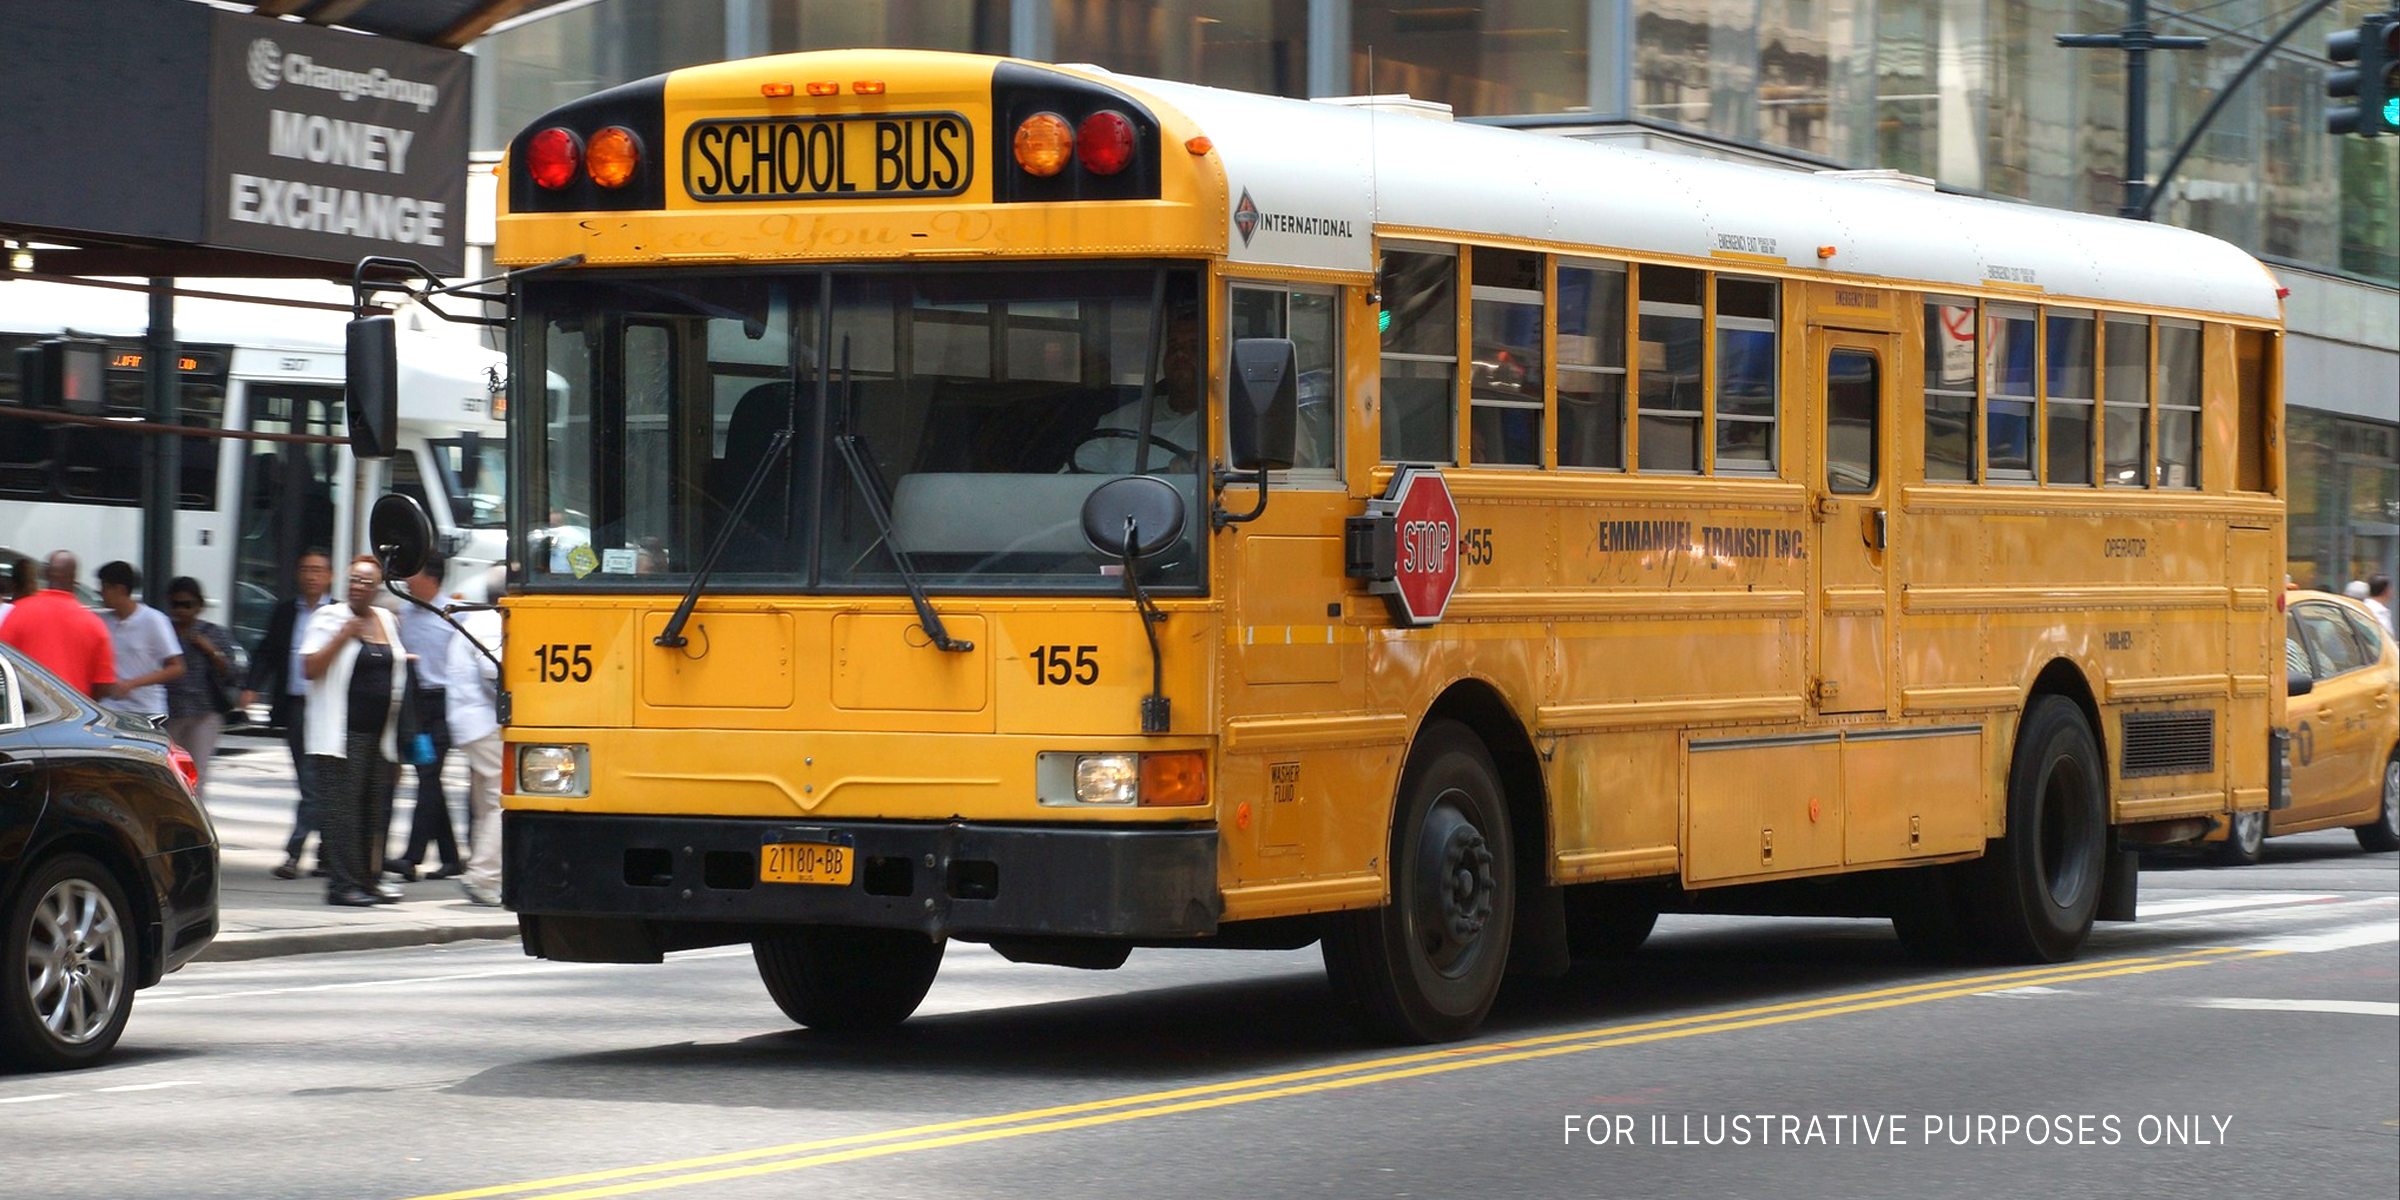 A school bus | Source: flickr.com/Chris Sampson/(CC BY-SA 2.0)